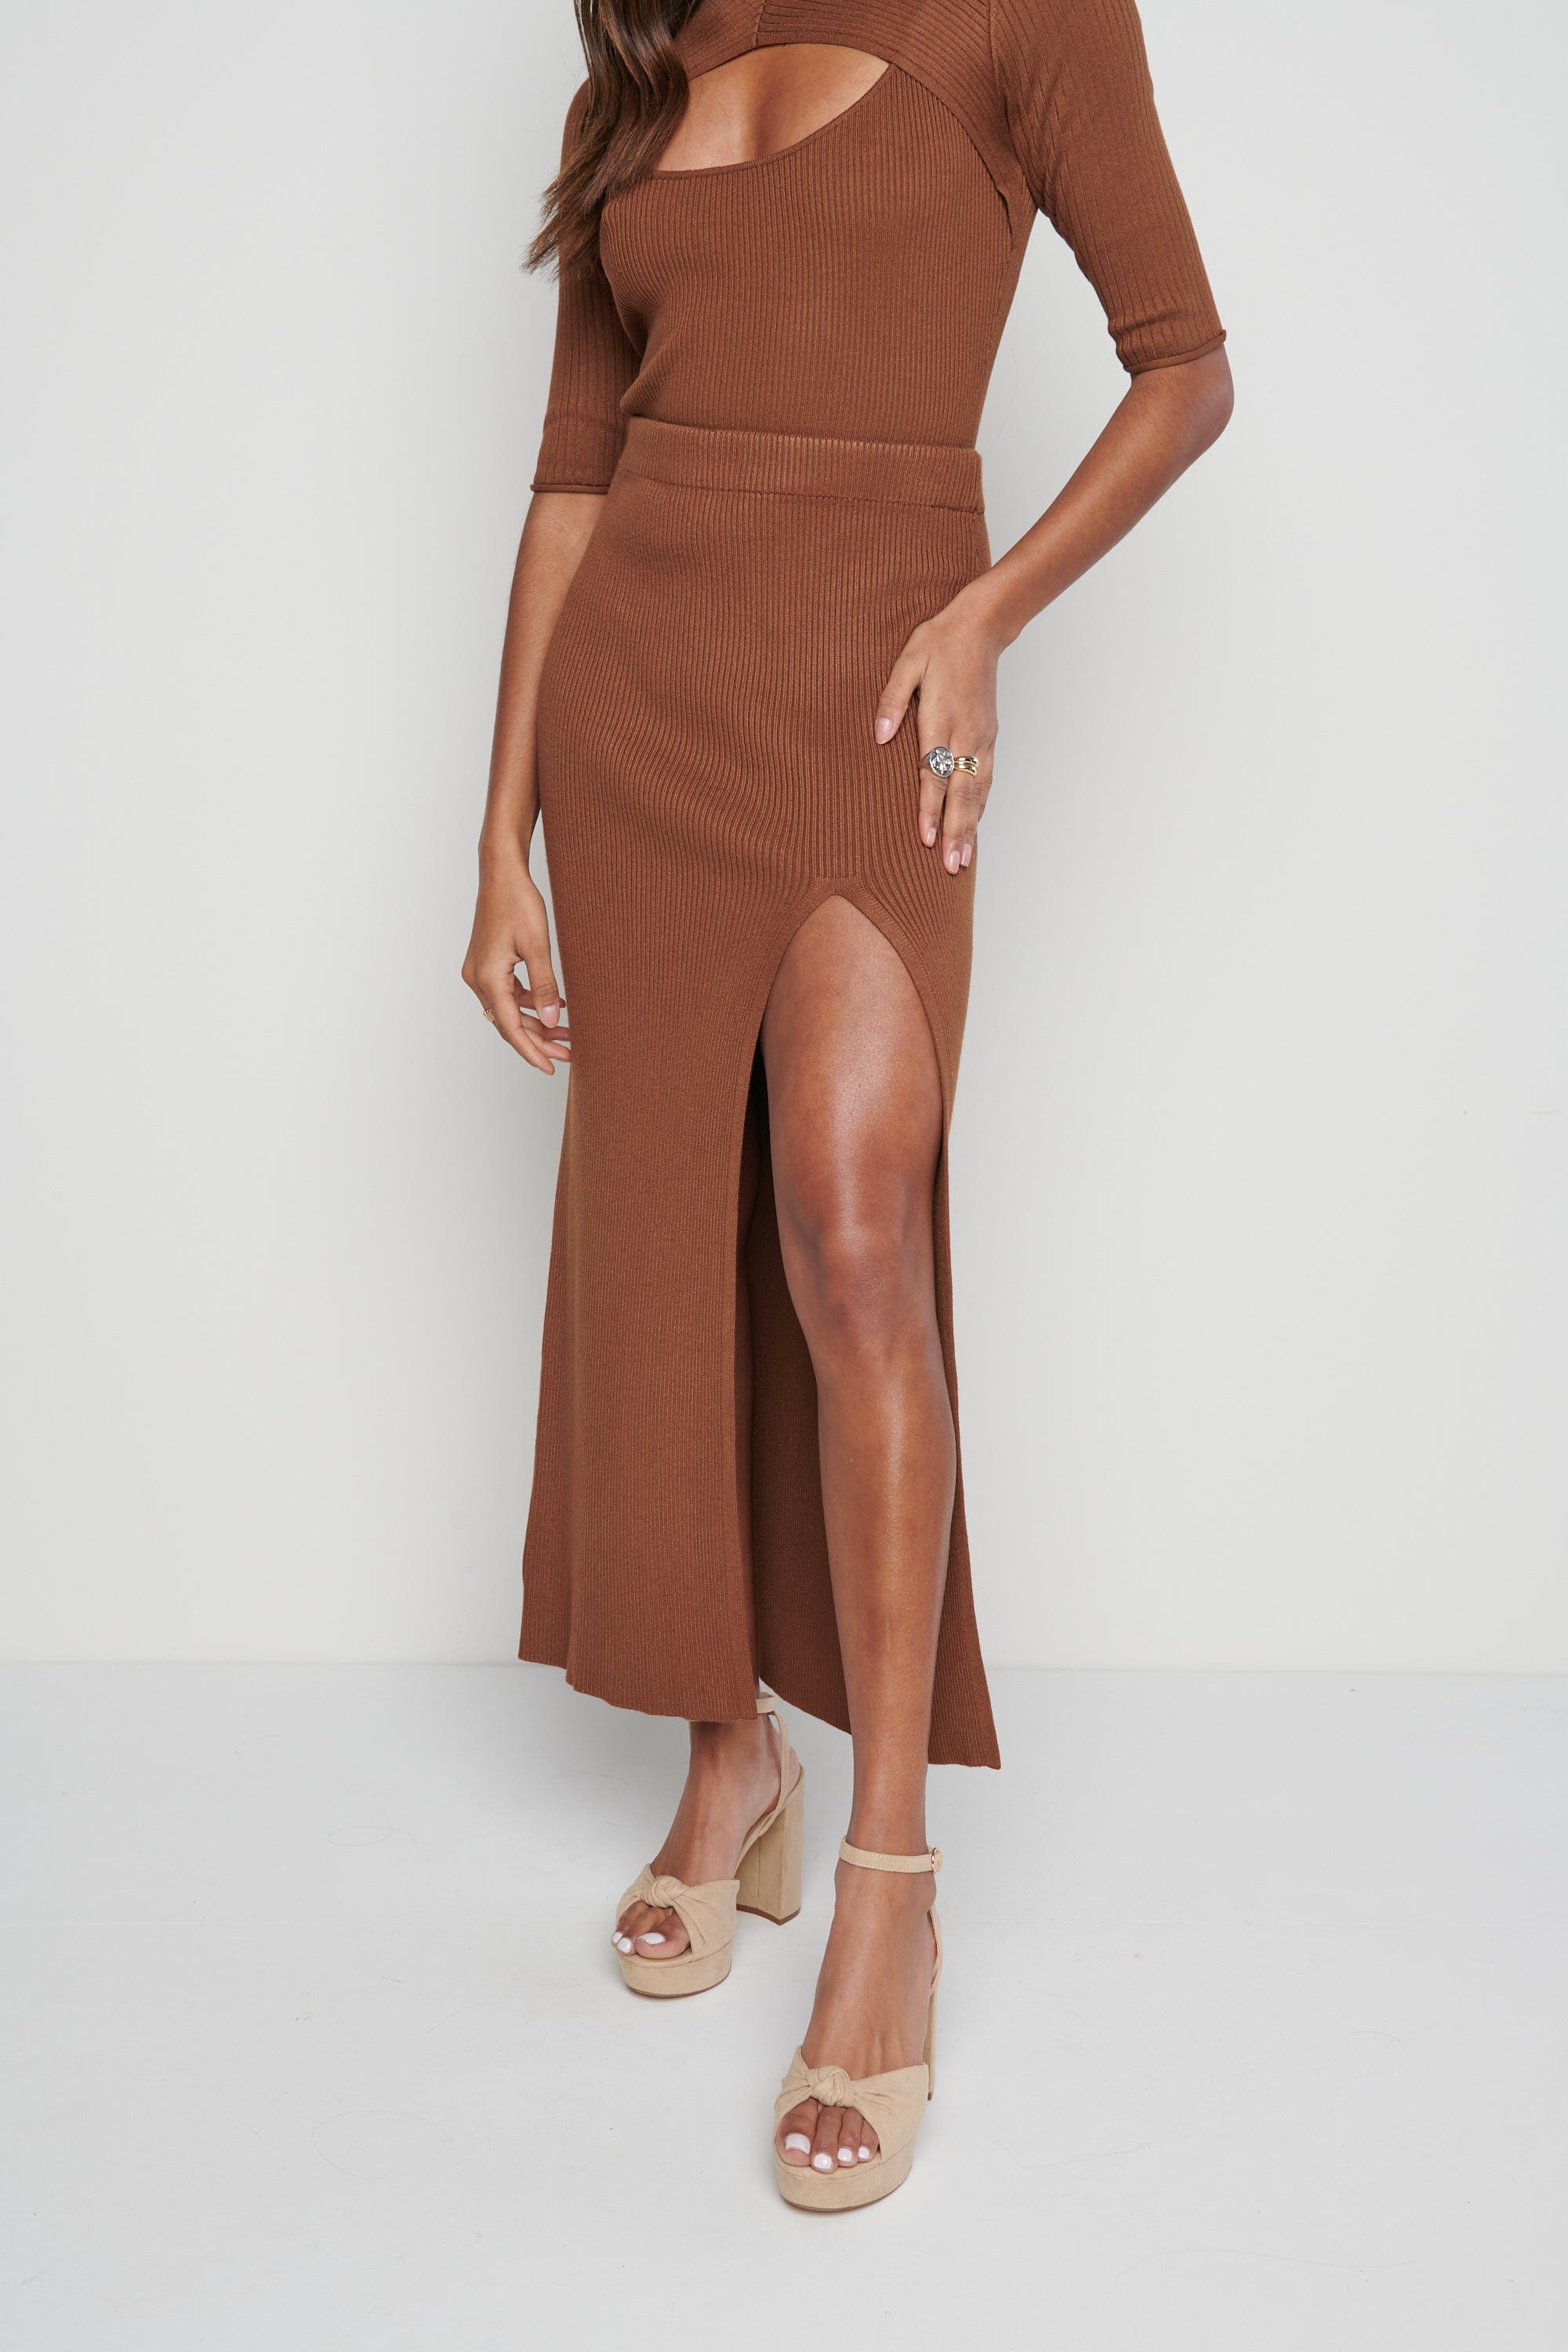 Serena Knit Skirt - Brown, XL